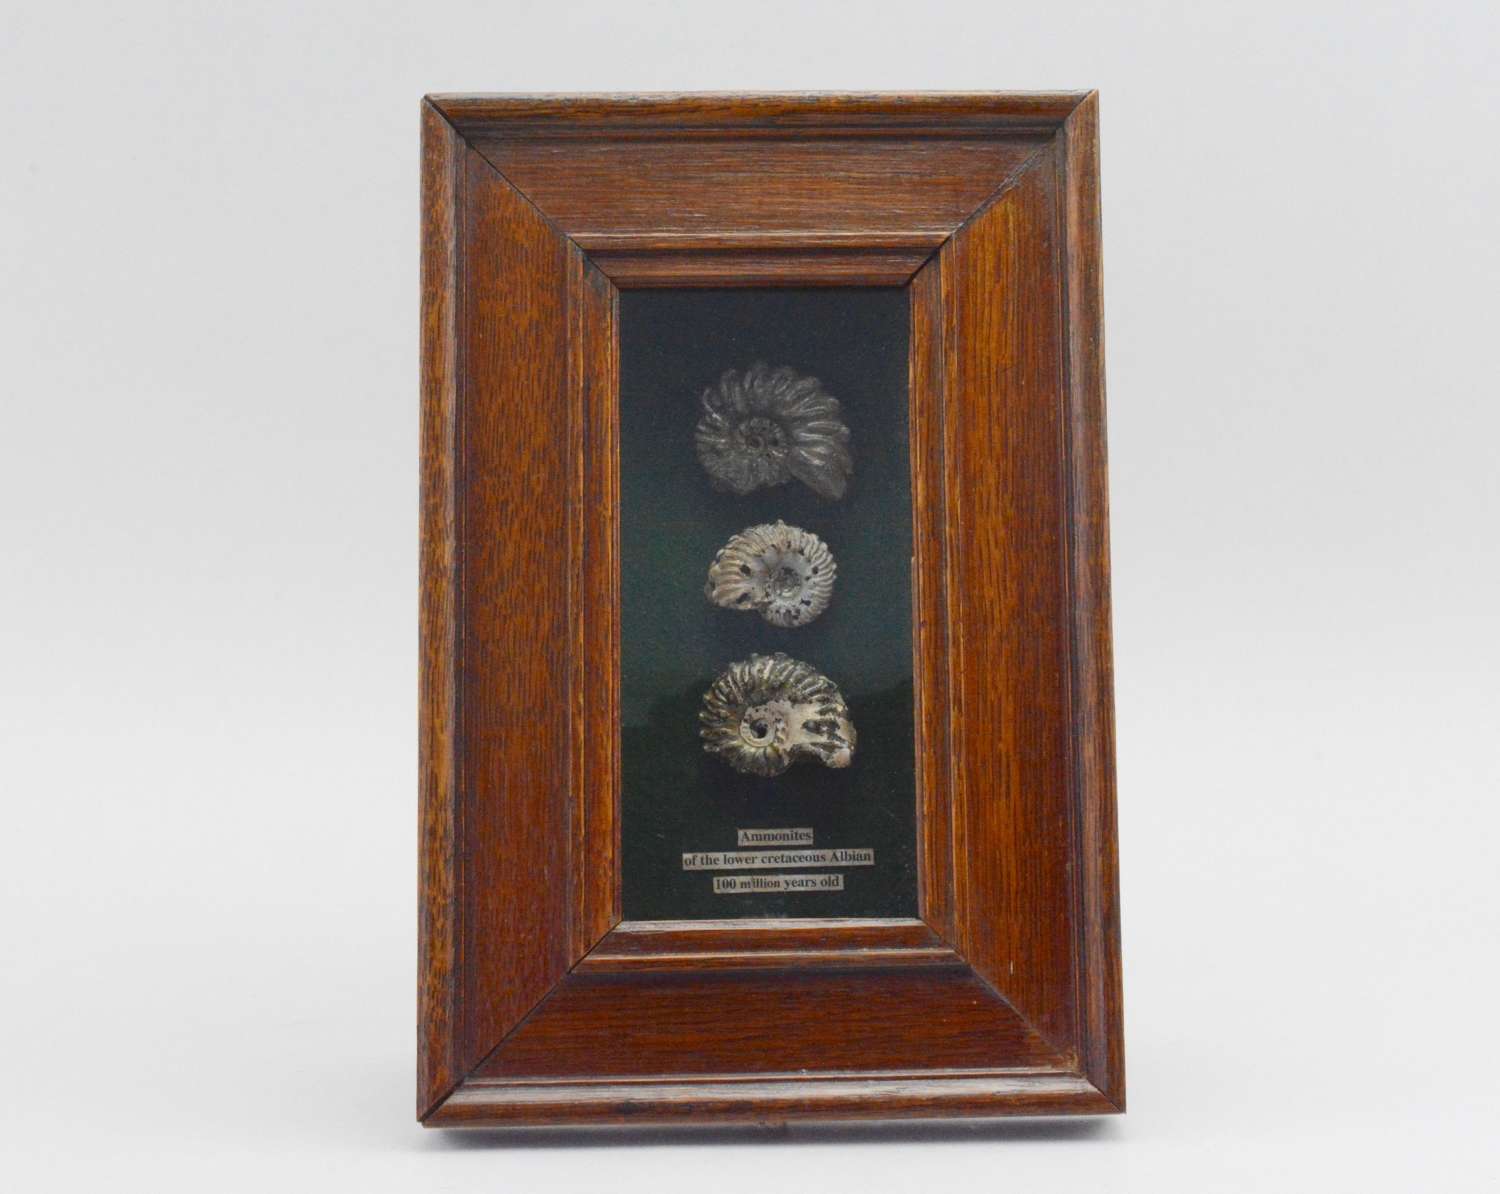 Three beautiful Ammonite specimens in an antique box frame.